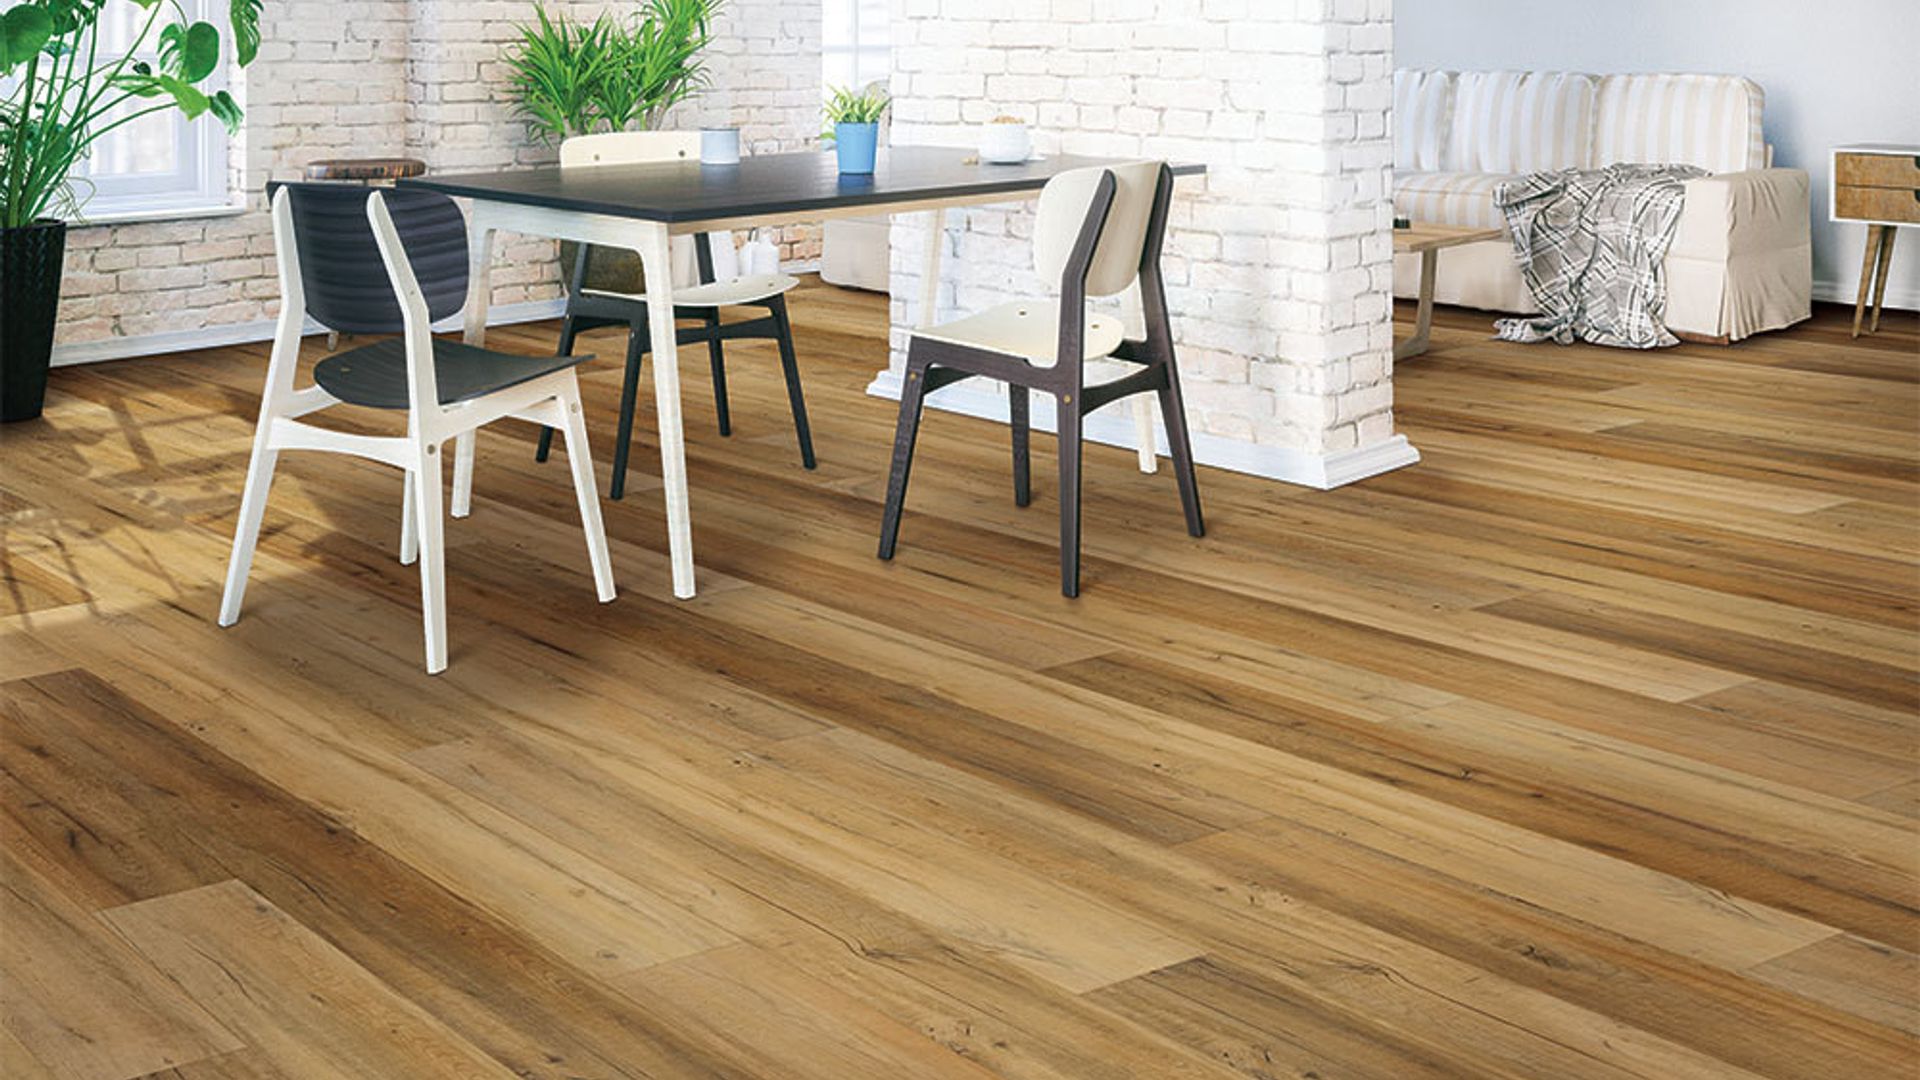 Virtue Oak Luxury Vinyl Plank Flooring, How To Take Care Of Coretec Flooring